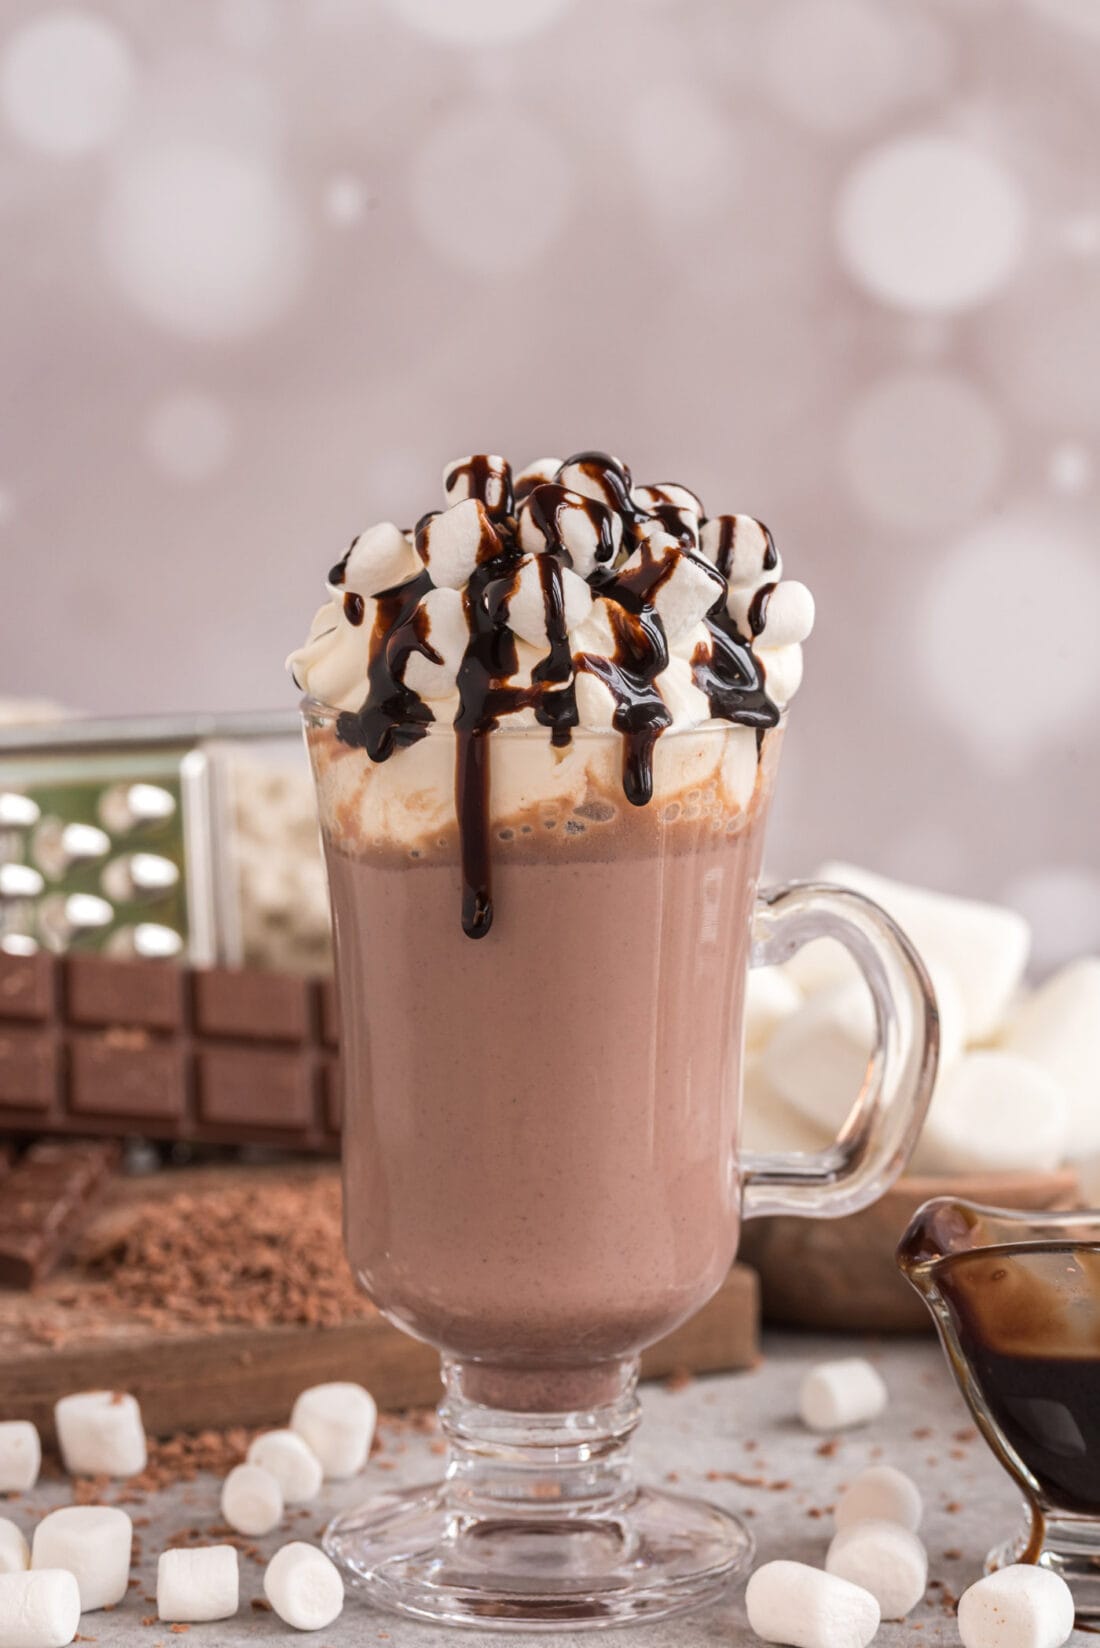 Mug of Crockpot Hot Chocolate topped with marshmallows and chocolate sauce